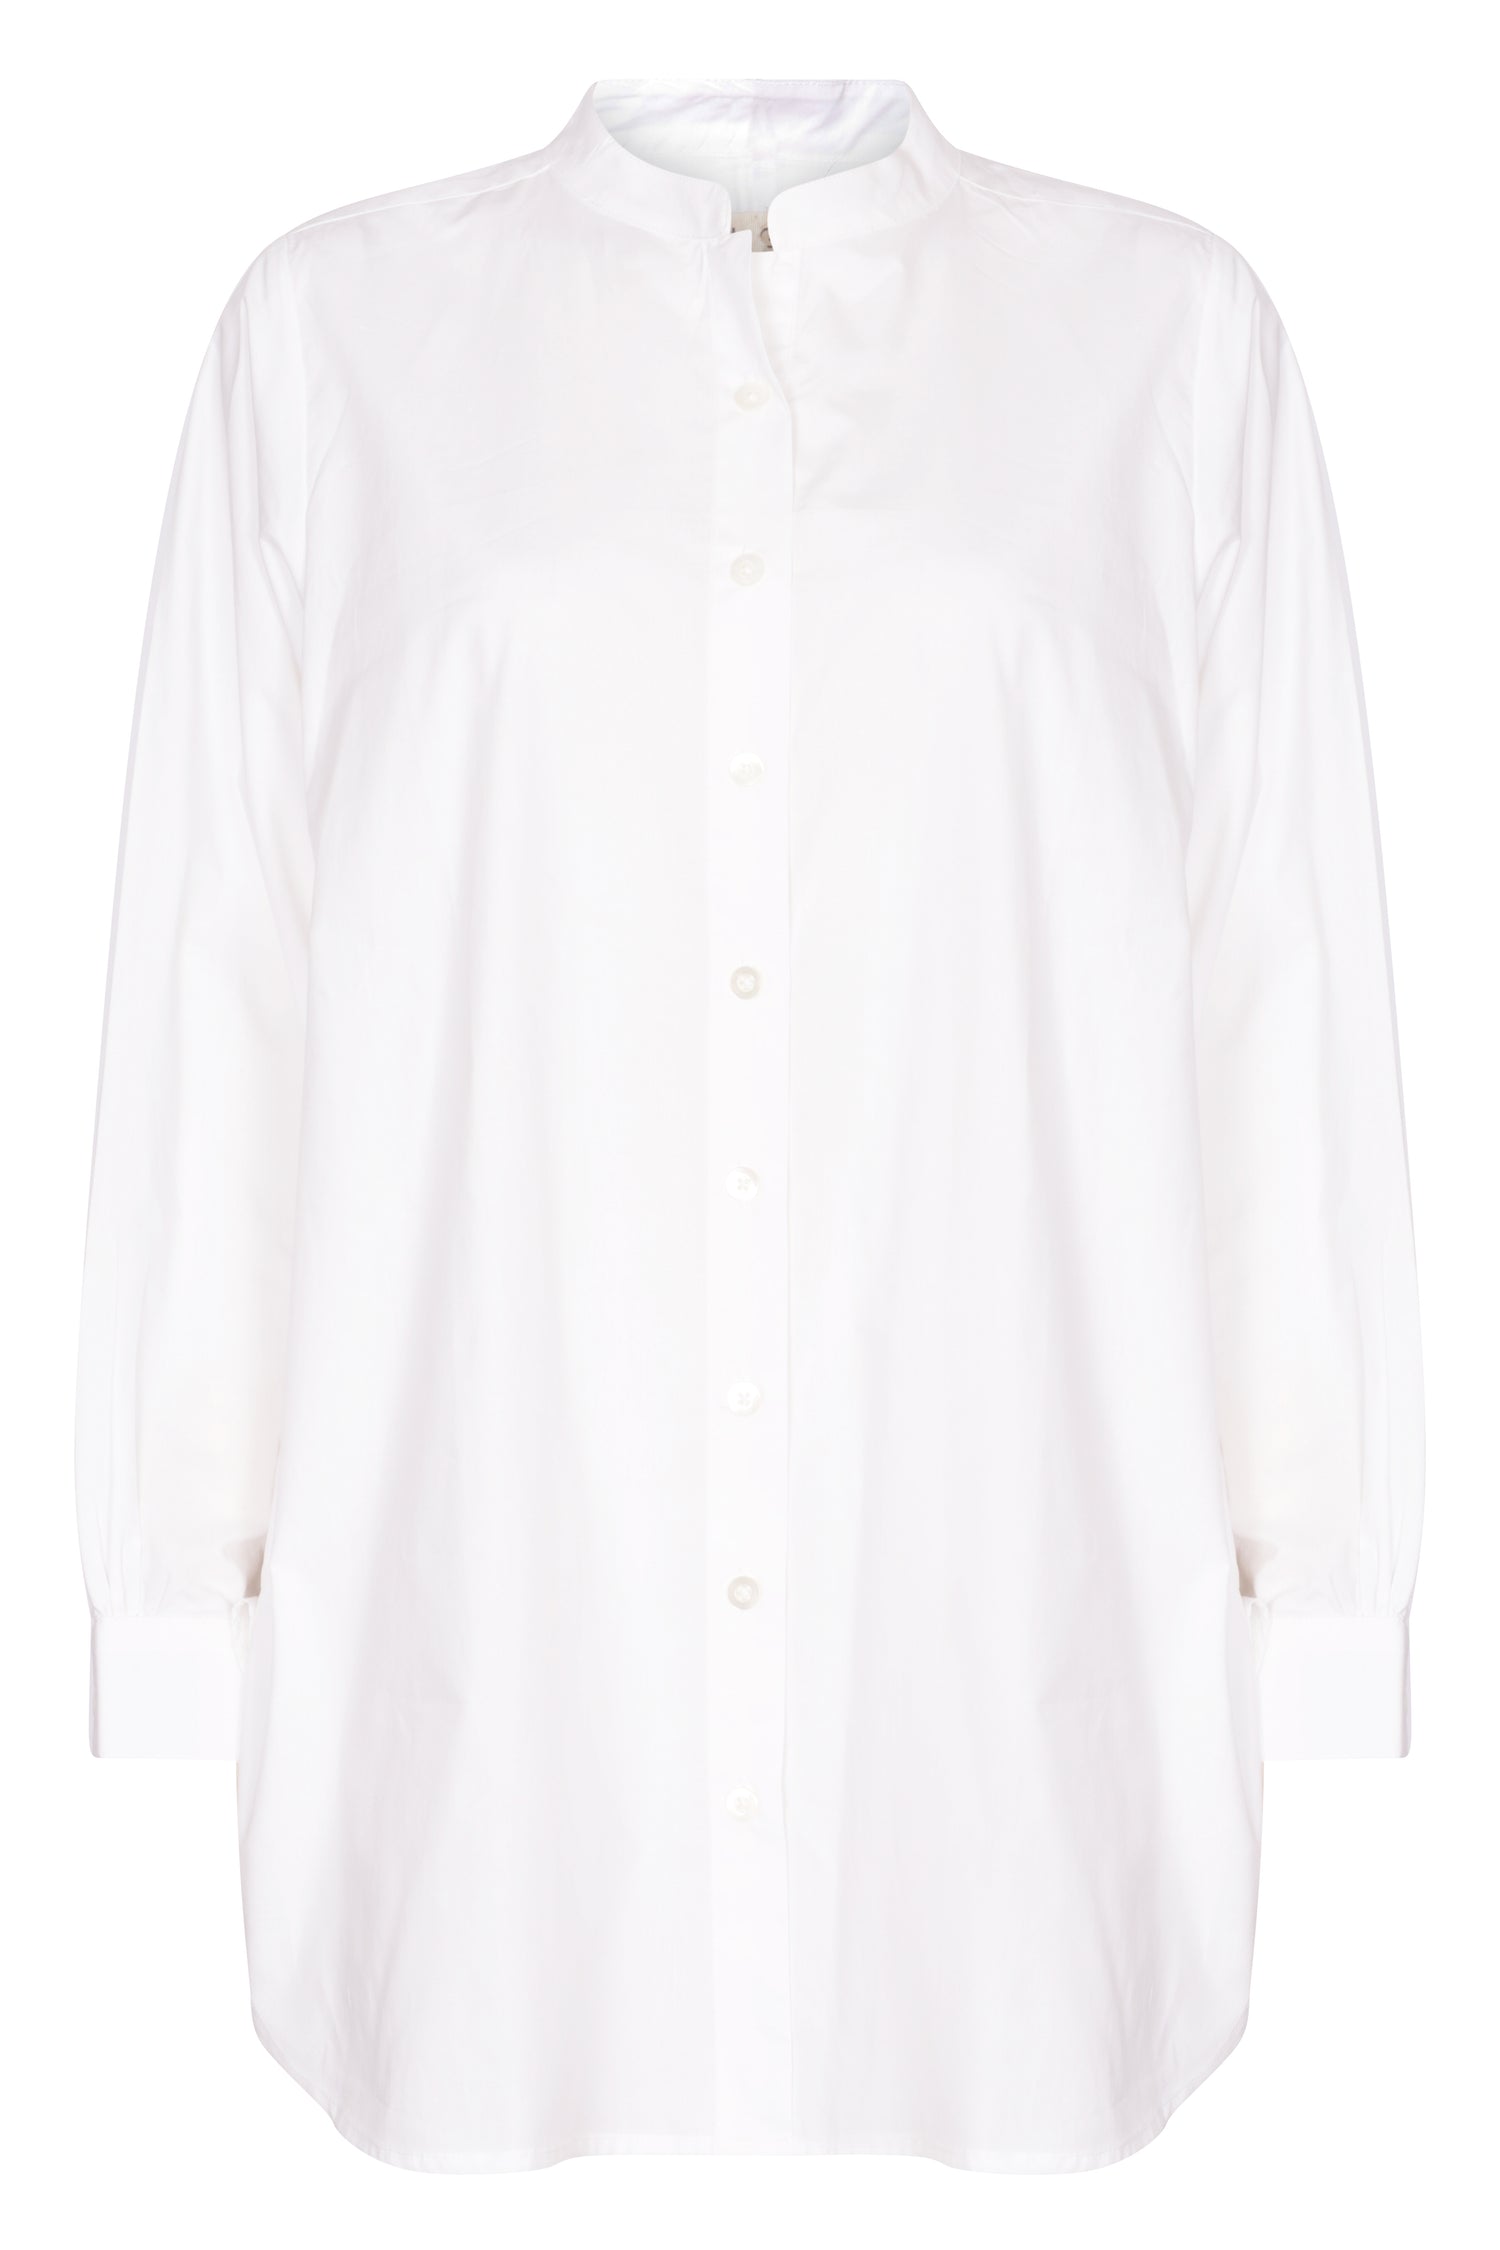 Malabar Oversized Shirt - White